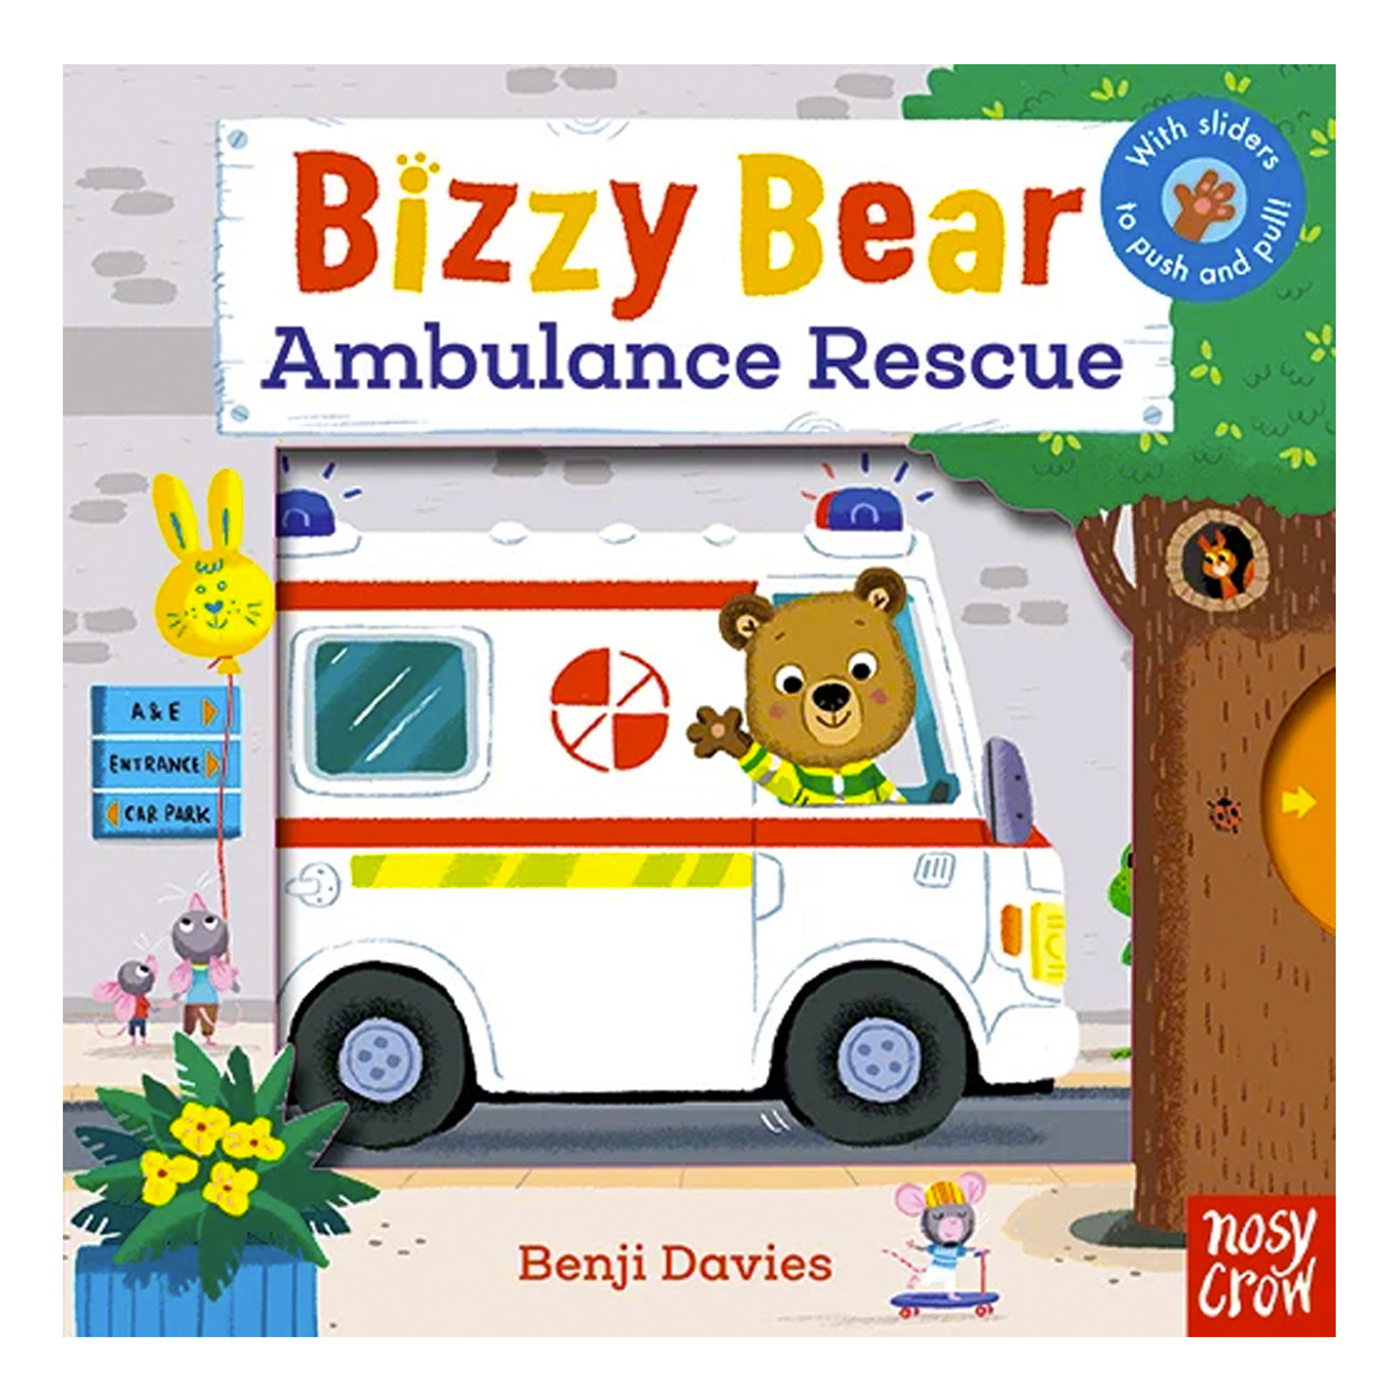  Bizzy Bear: Ambulance Rescue